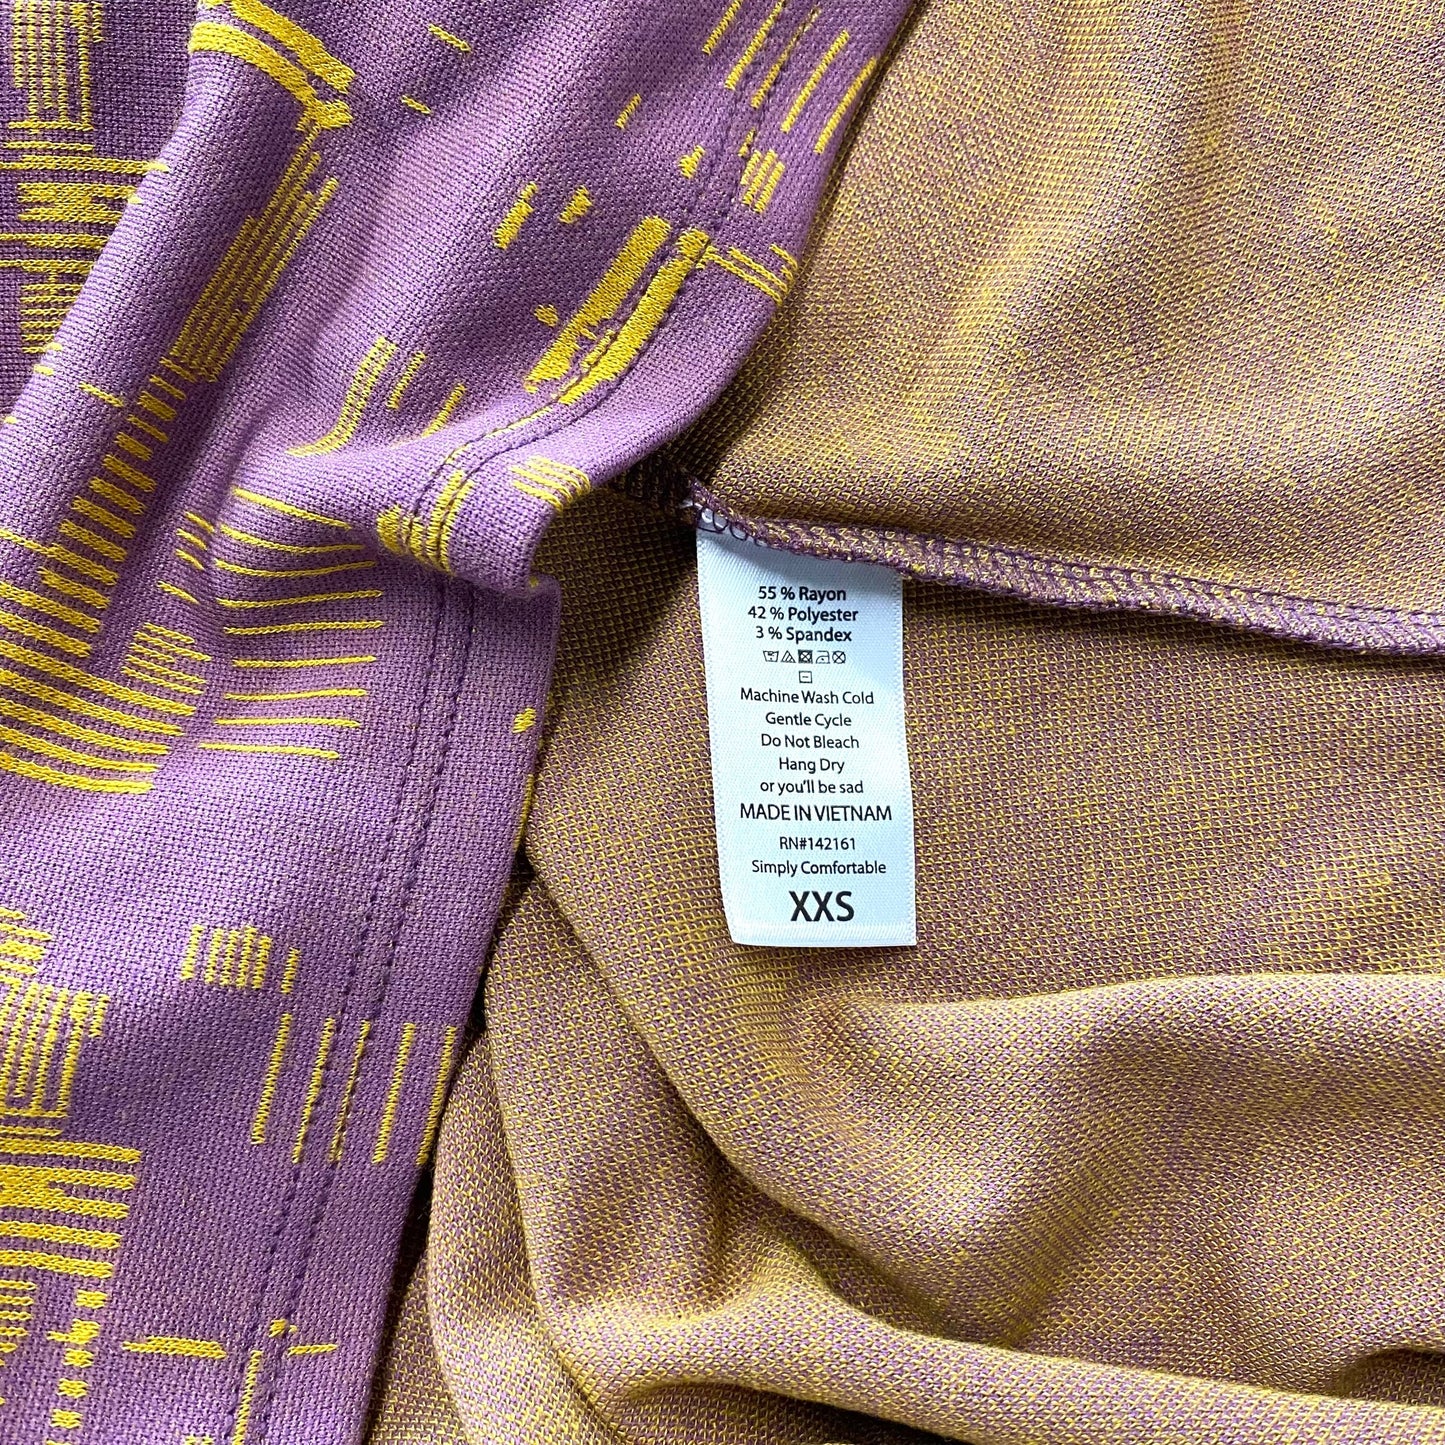 LuLaRoe Womens XXS Purple/Yellow Abstract 'Carly' S/s Swing Dress NWT